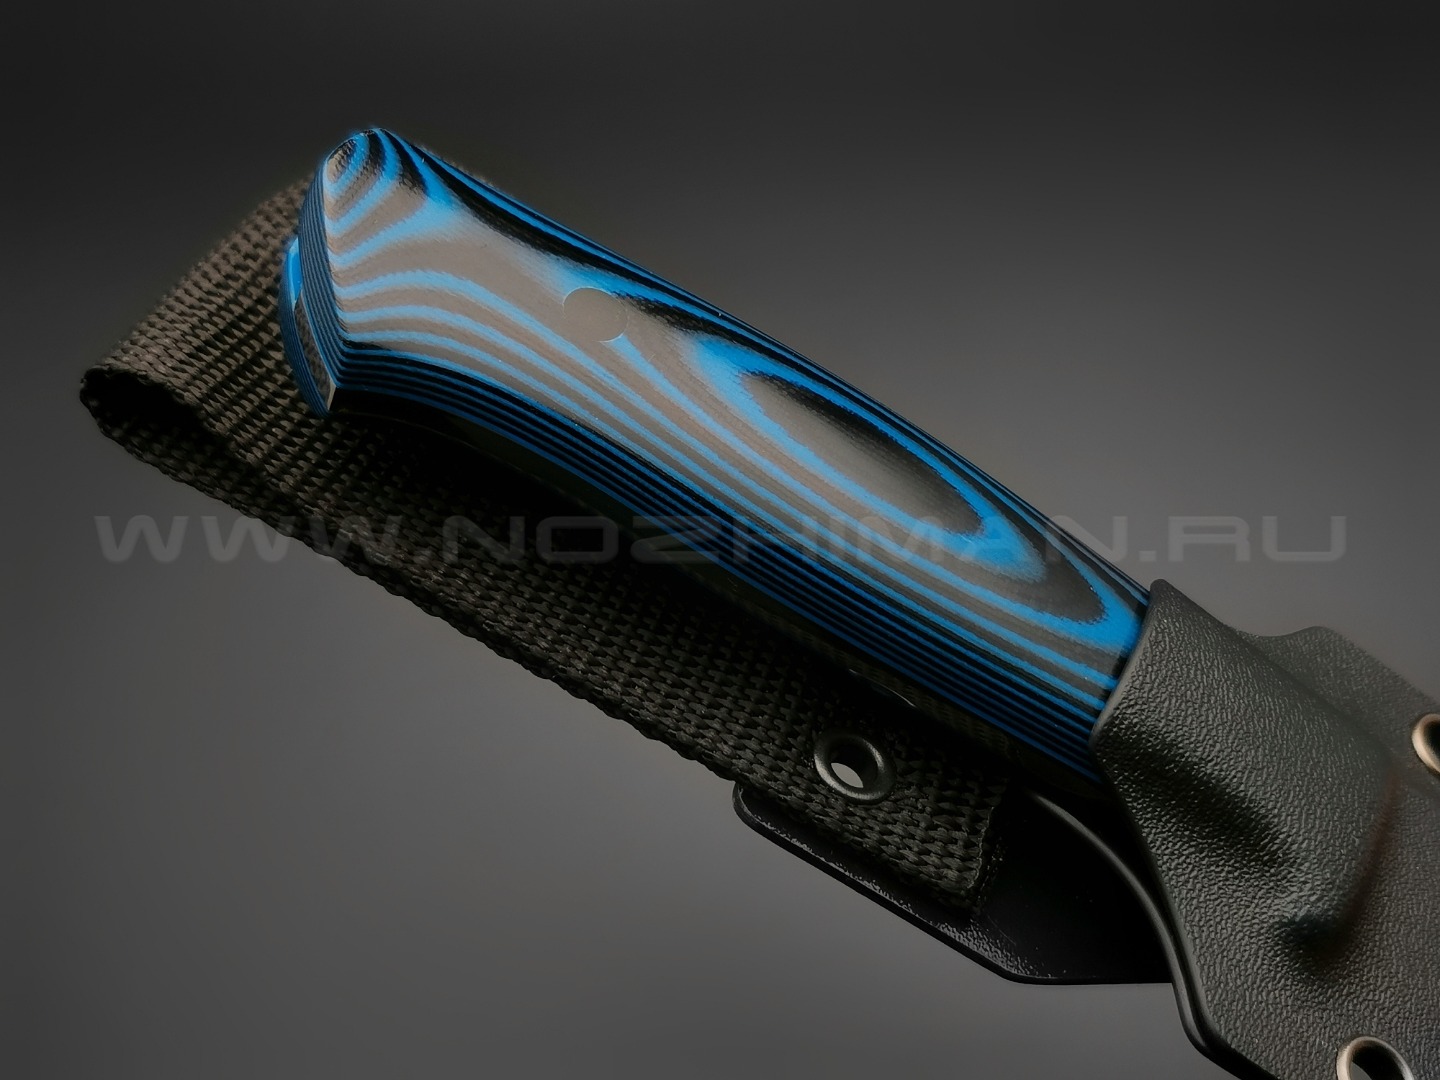 Apus Knives нож Fishman сталь N690, рукоять G10 black & blue